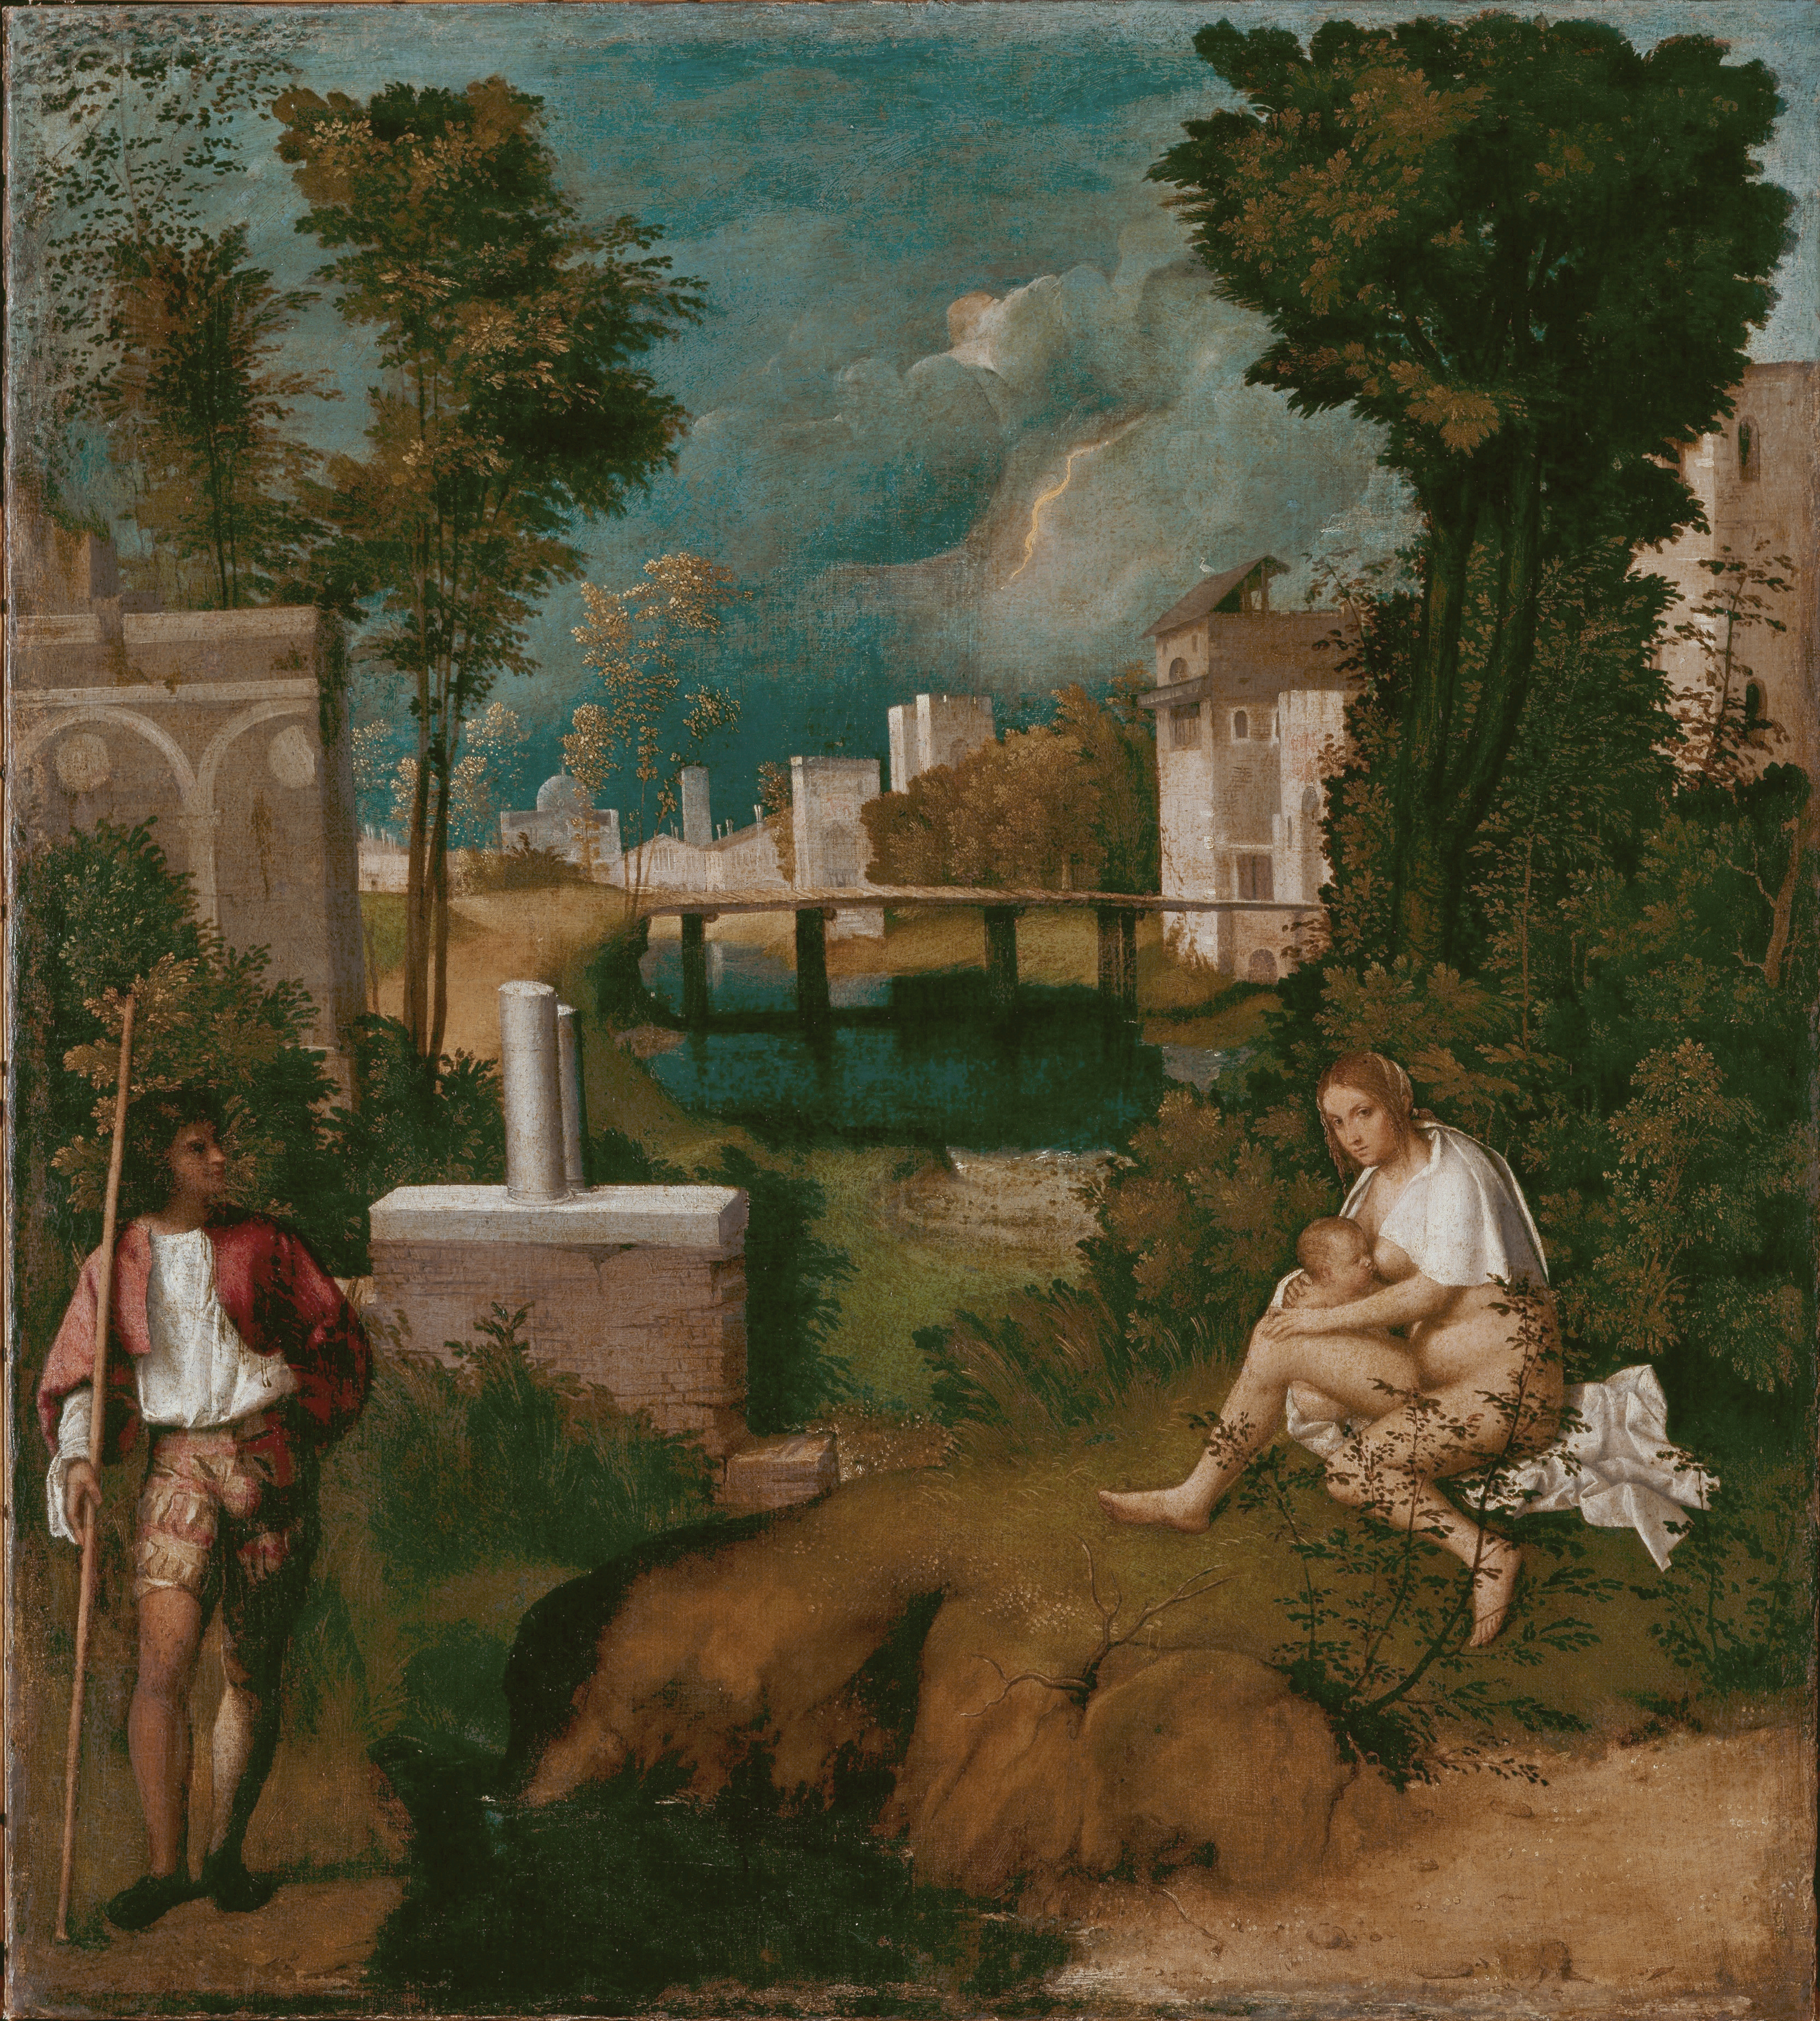 https://upload.wikimedia.org/wikipedia/commons/8/8f/Giorgione_019.jpg